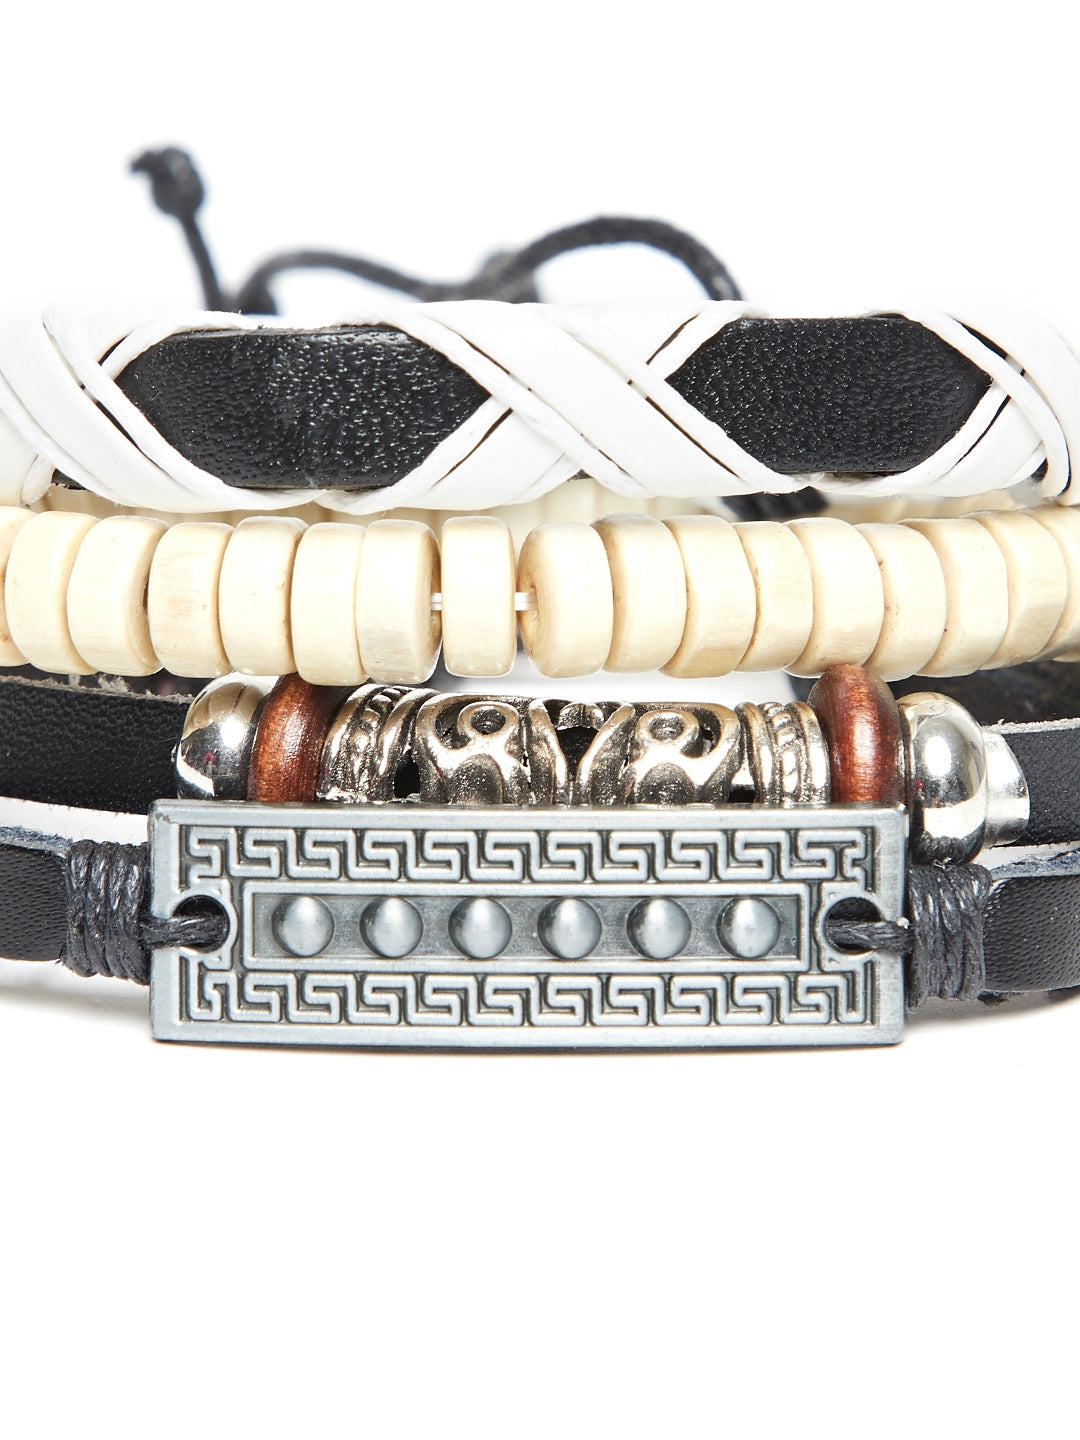 Alvaro Castagnino  Black and white Leather Wraparound Bracelet